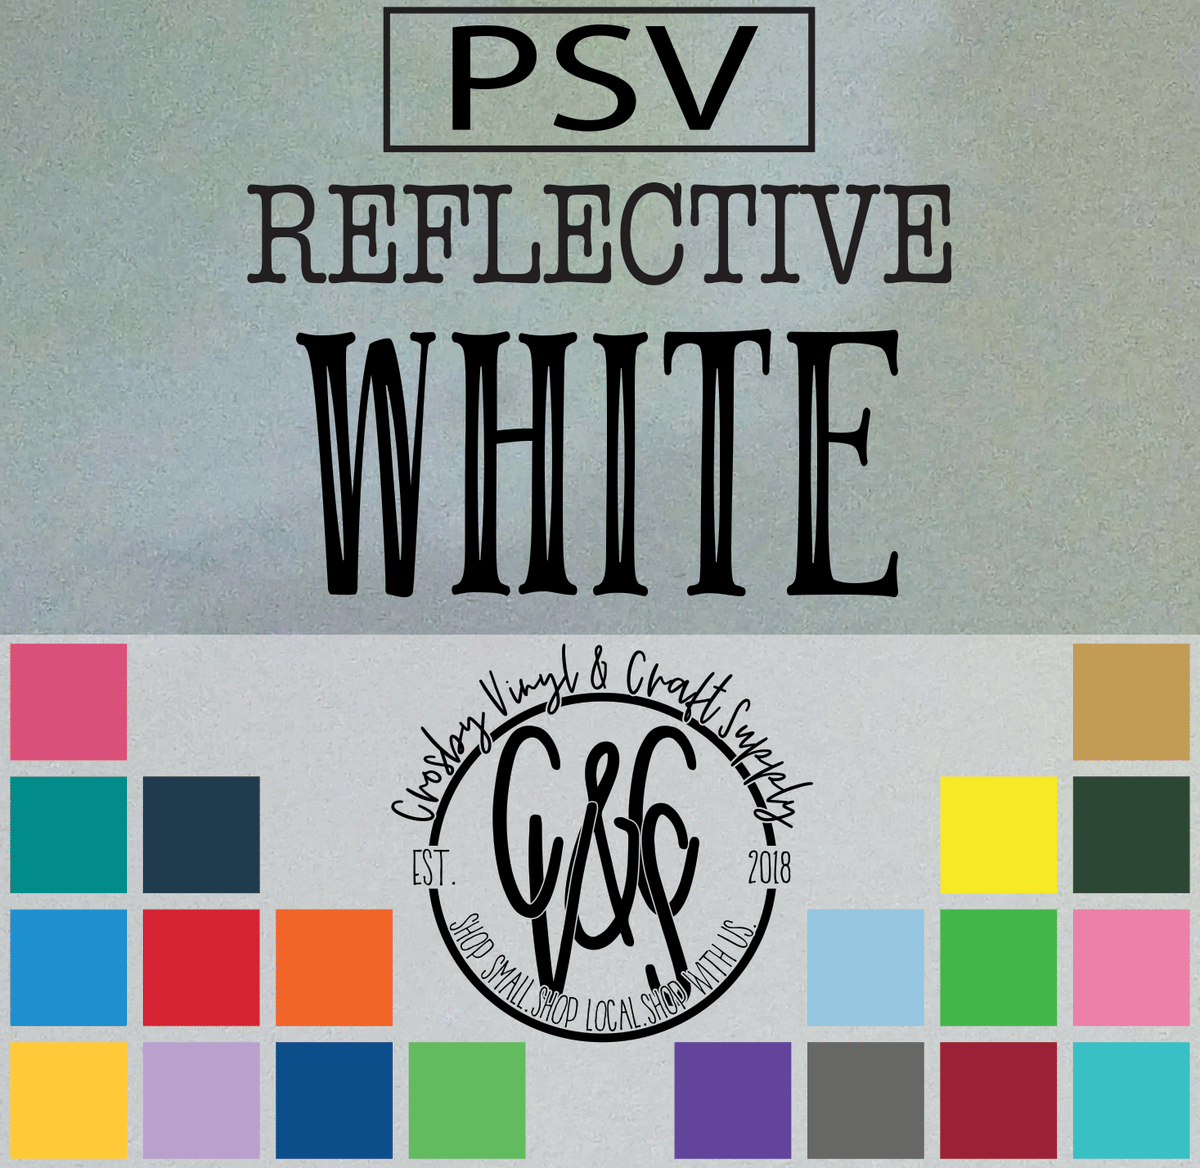  Engineering Grade White Reflective Vinyl, 12x12